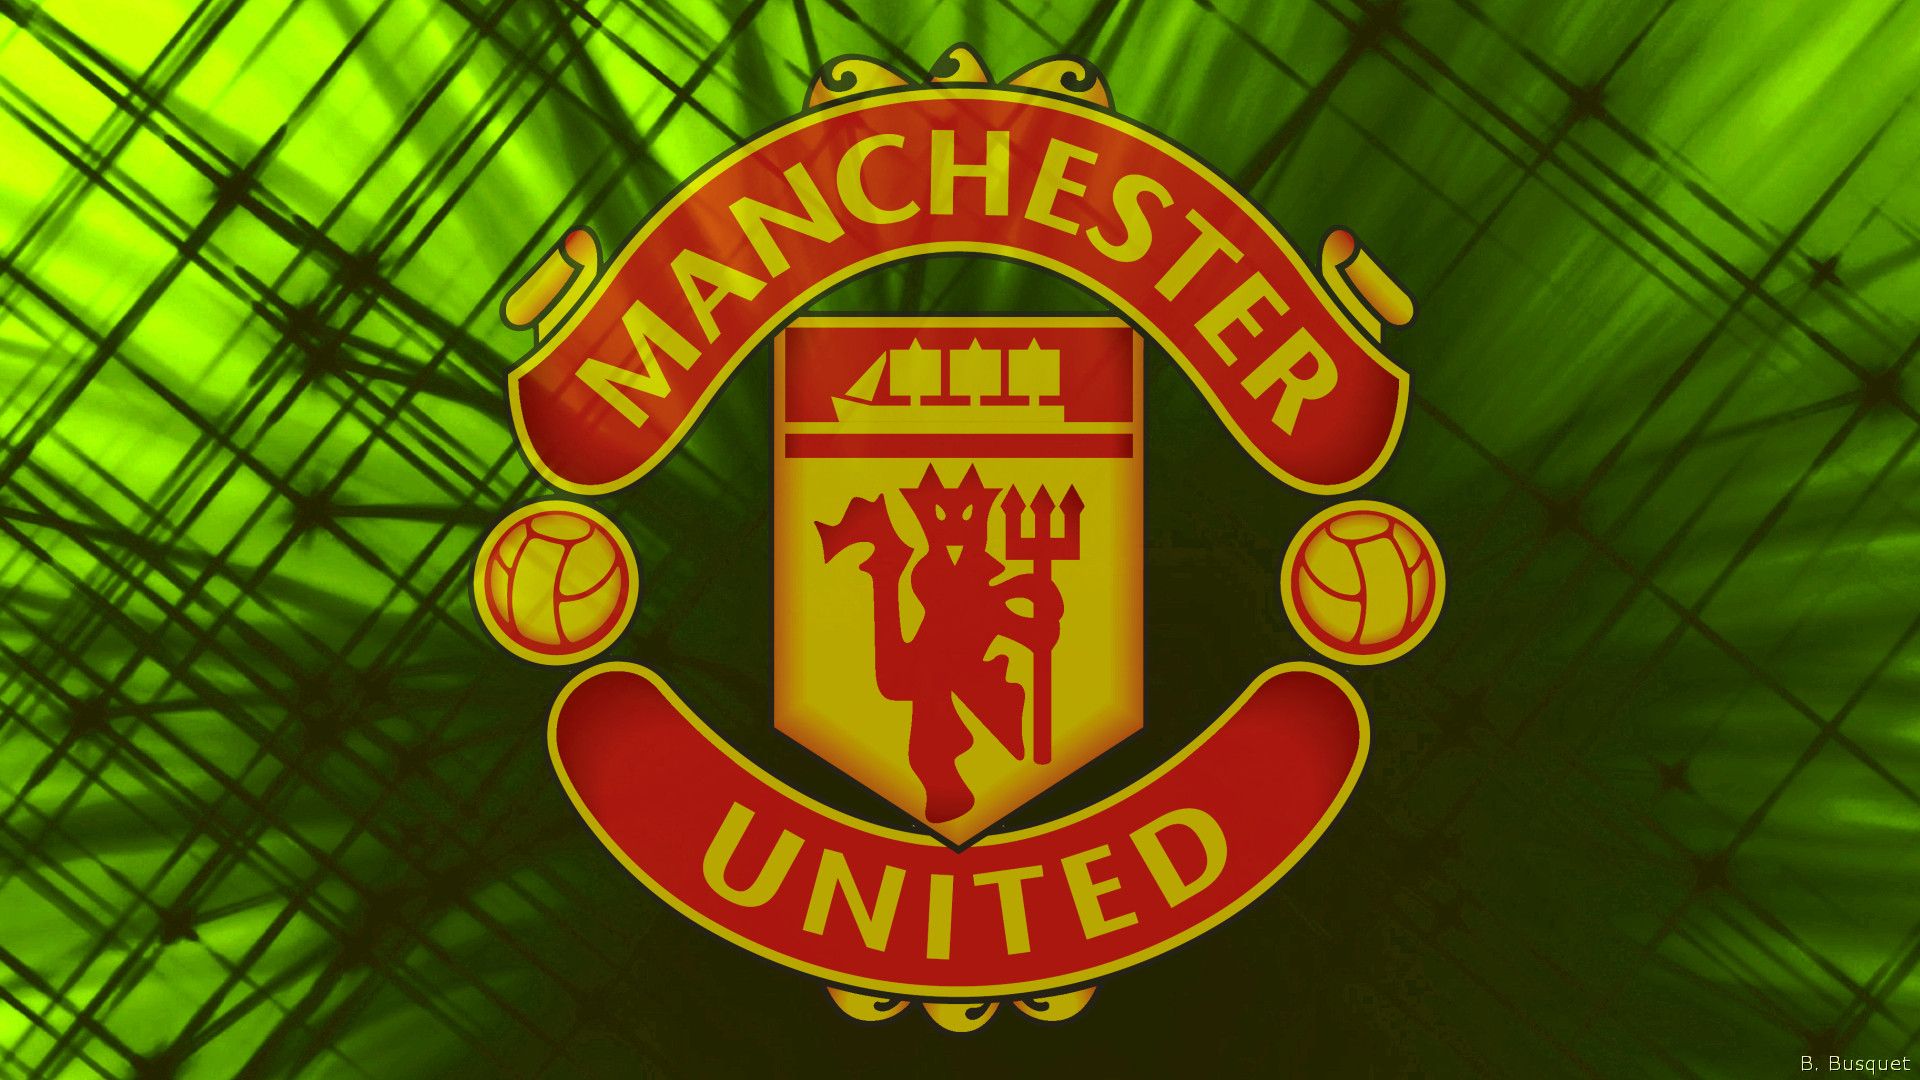 Manchester United football team's HD Wallpaper